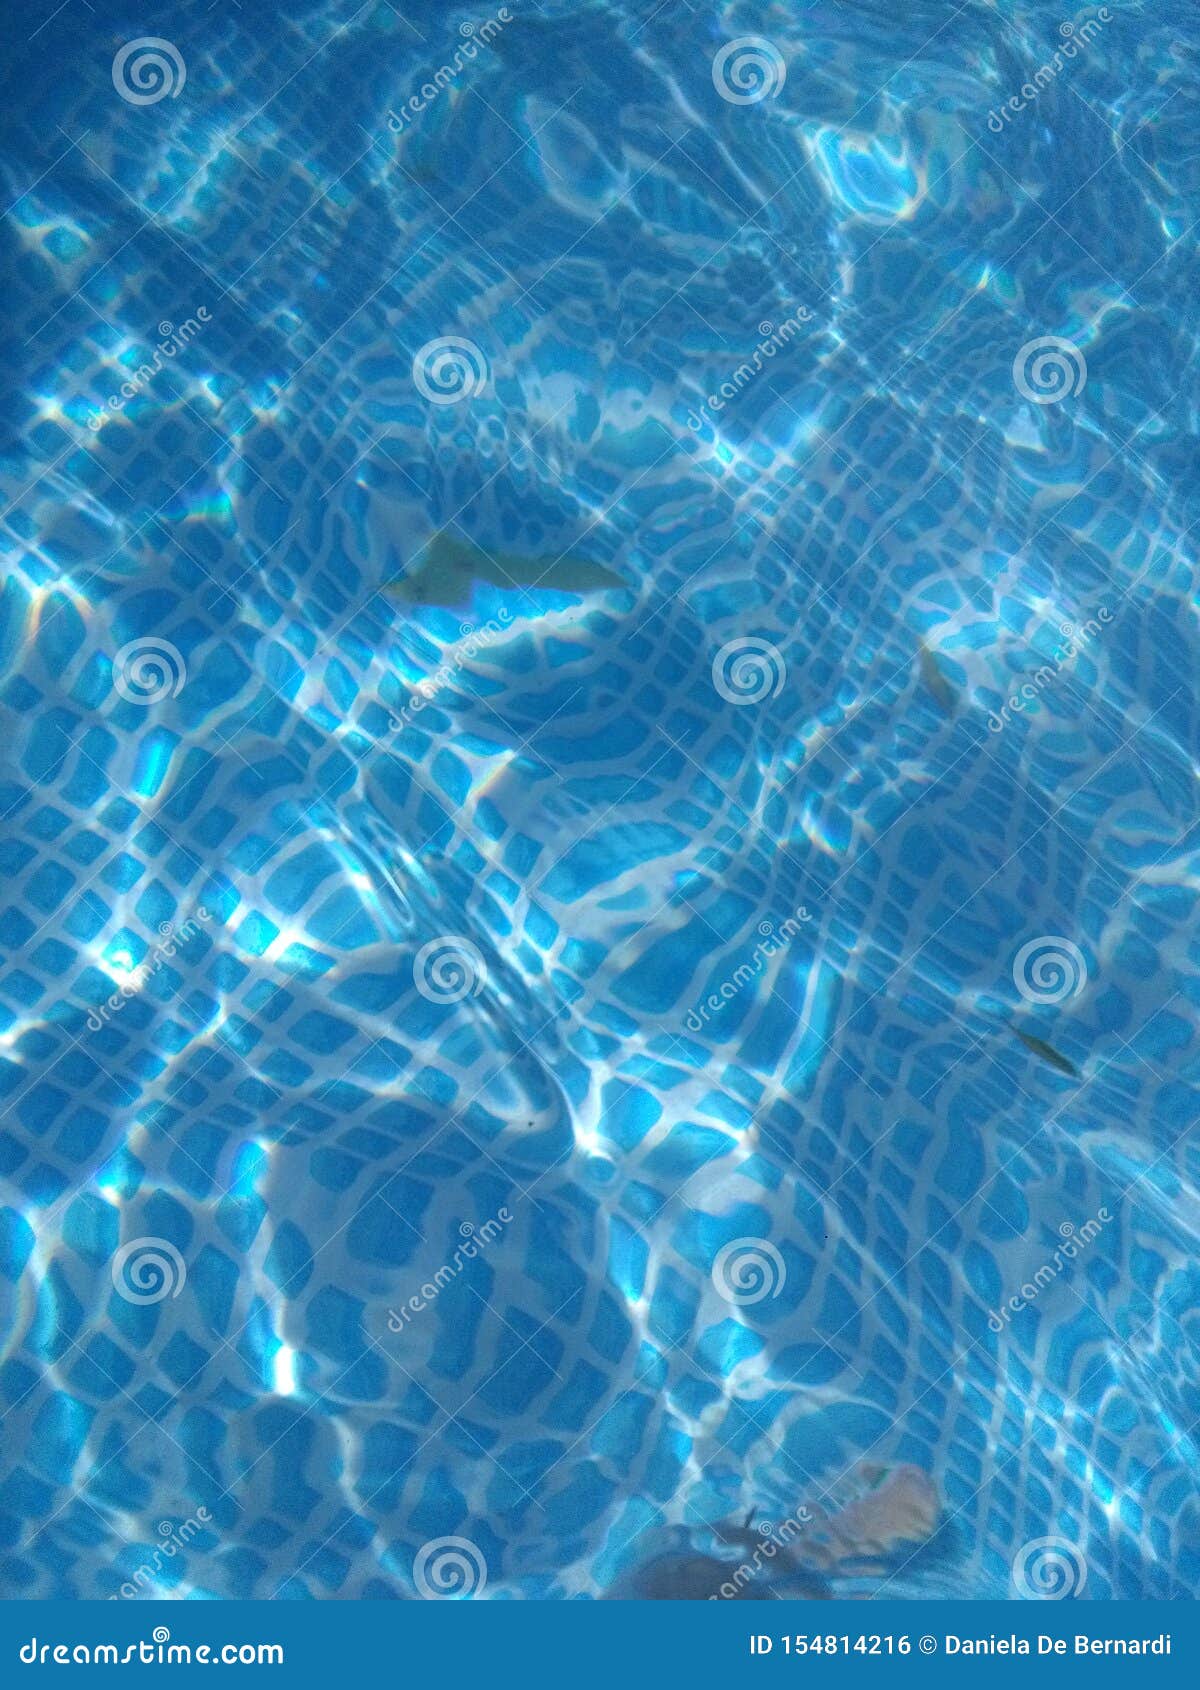 Tumblr water. stock photo. Image of wallpaper, pool - 154814216